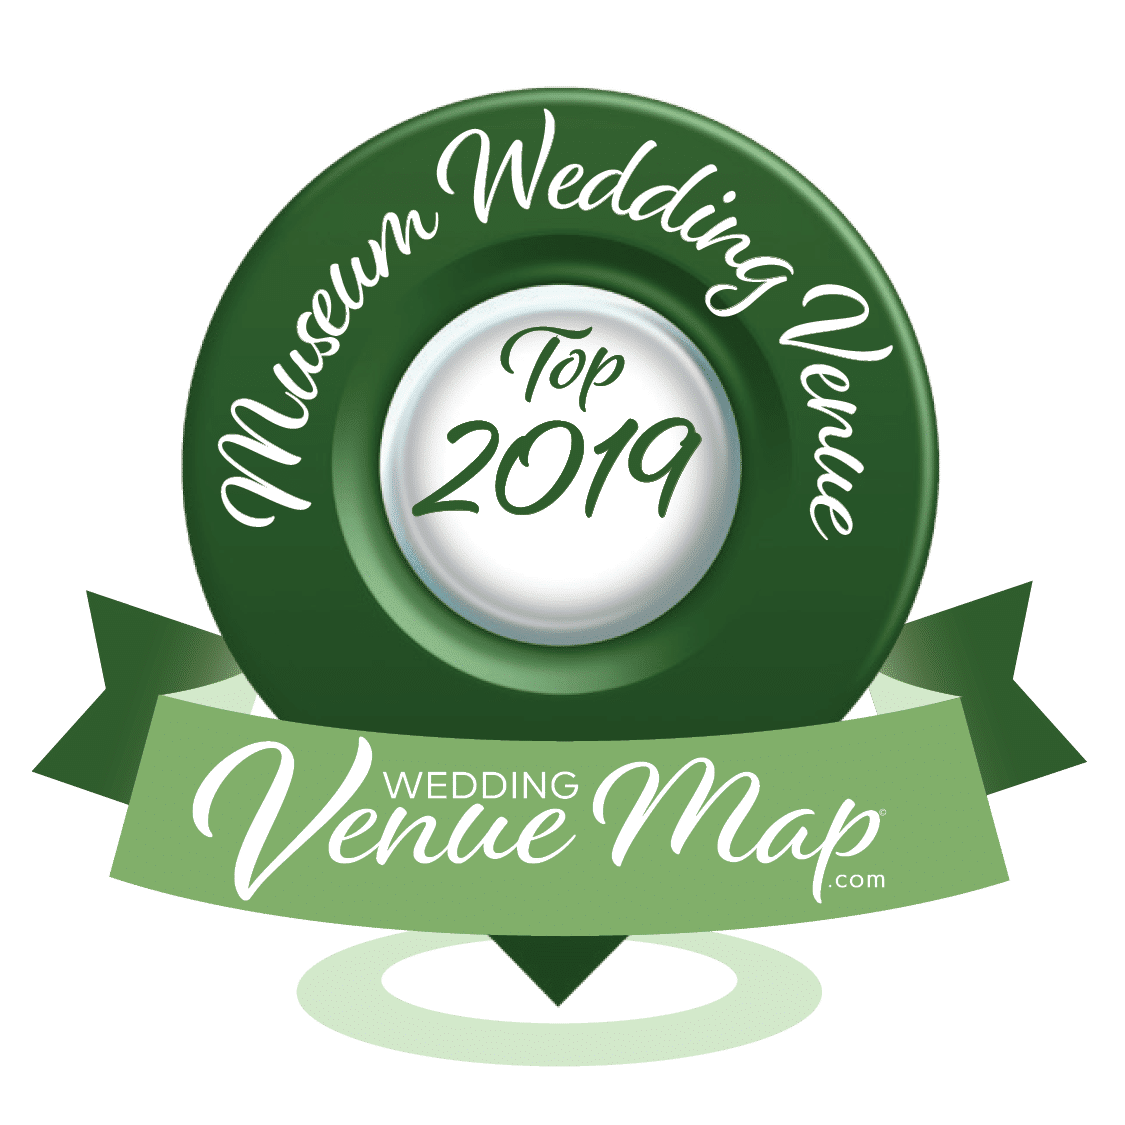 2019 Top Museum Wedding Venue badge